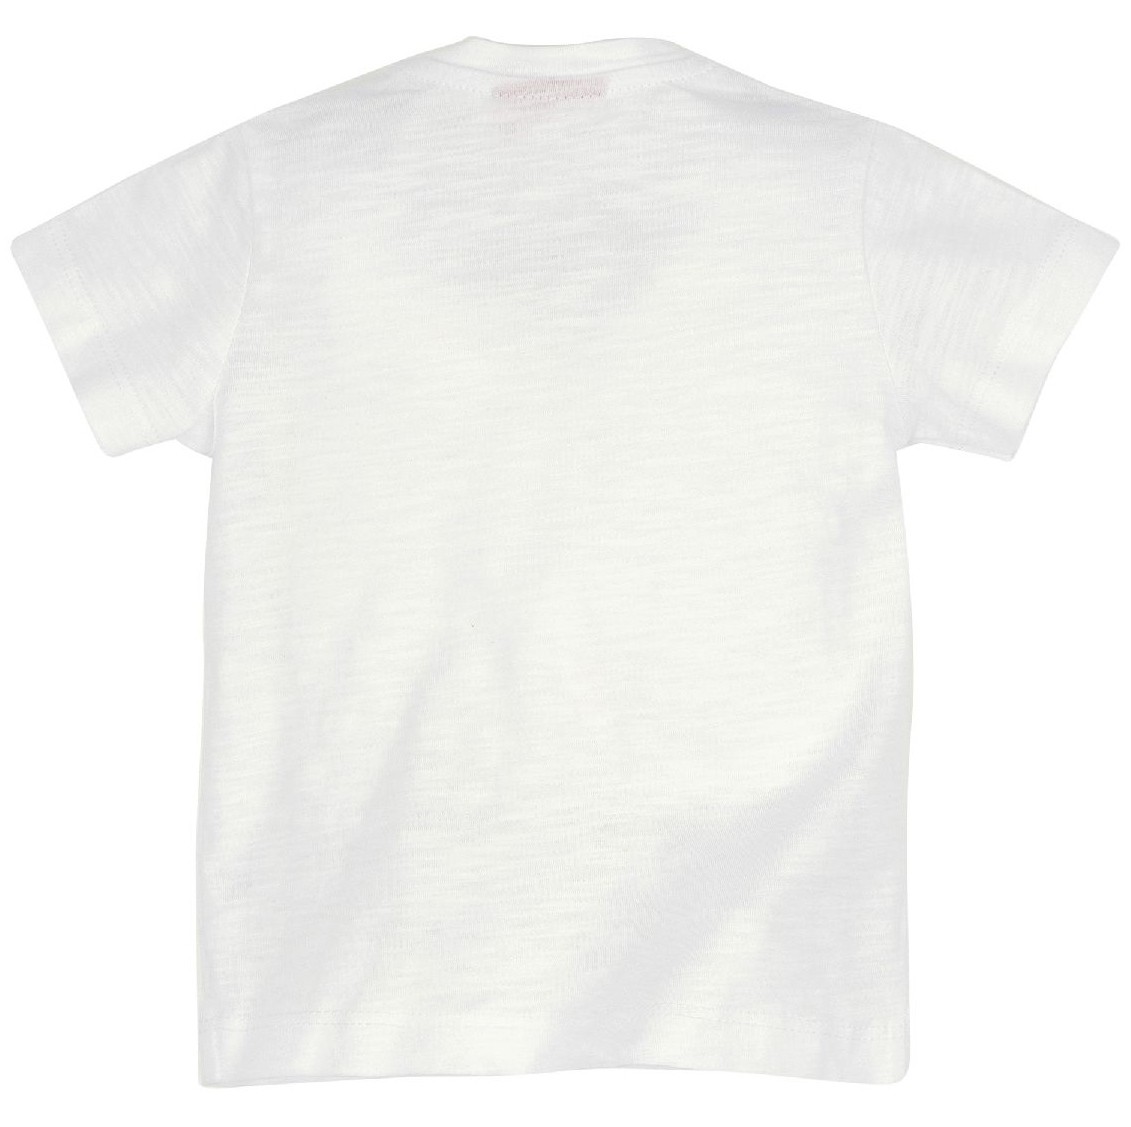 Vorschau: T-Shirt &#039;Gipfelkraxler&#039;